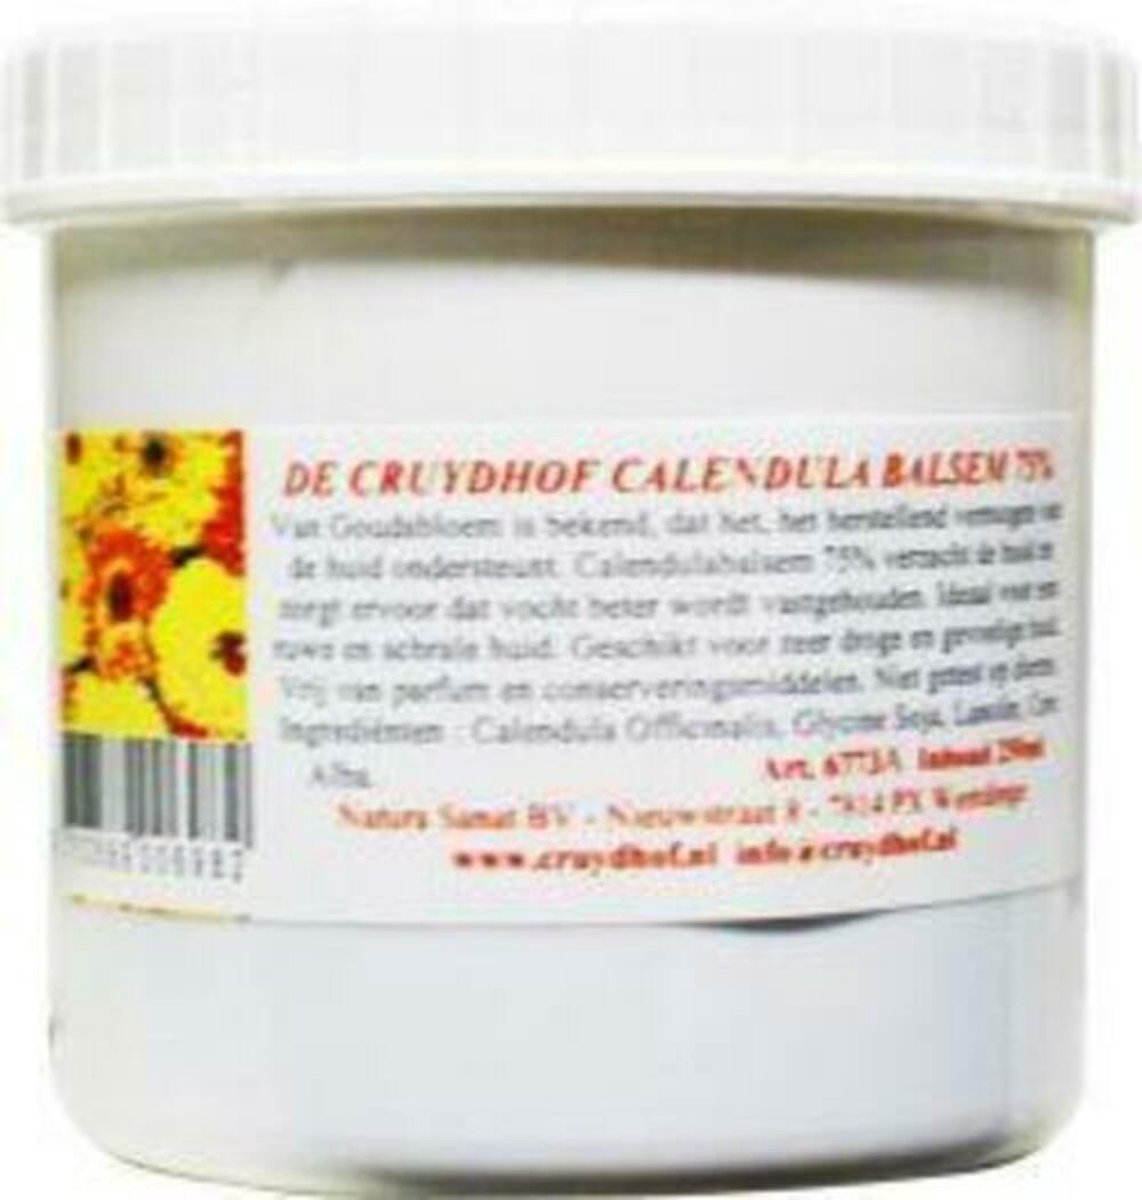 Cruydhof 75% Calendula Balsem - 50 ml - Bodycrème